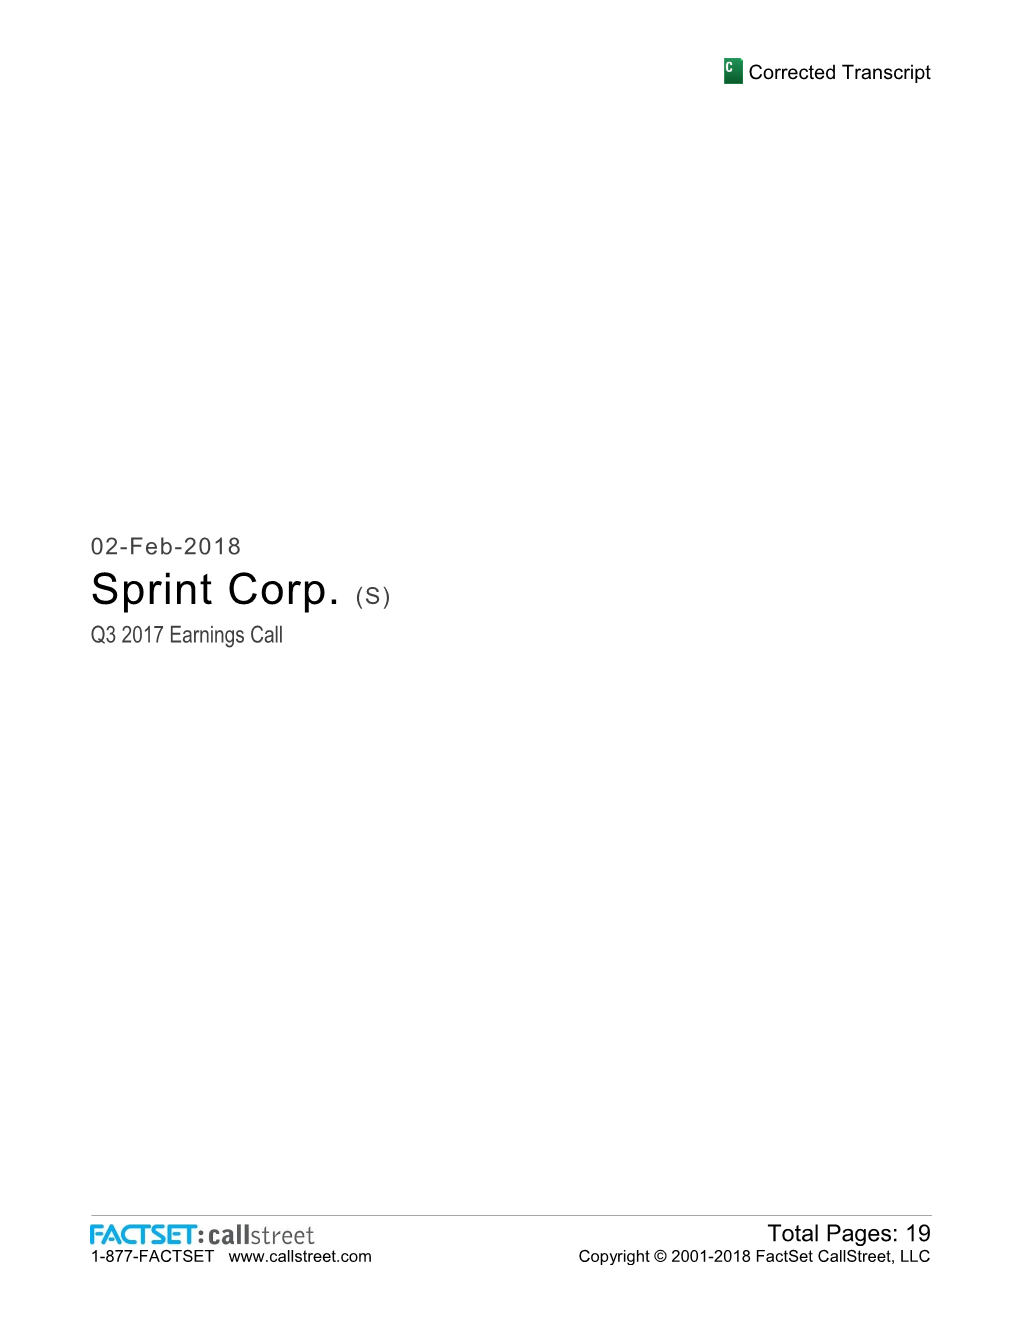 Sprint Corp. (S) Q3 2017 Earnings Call